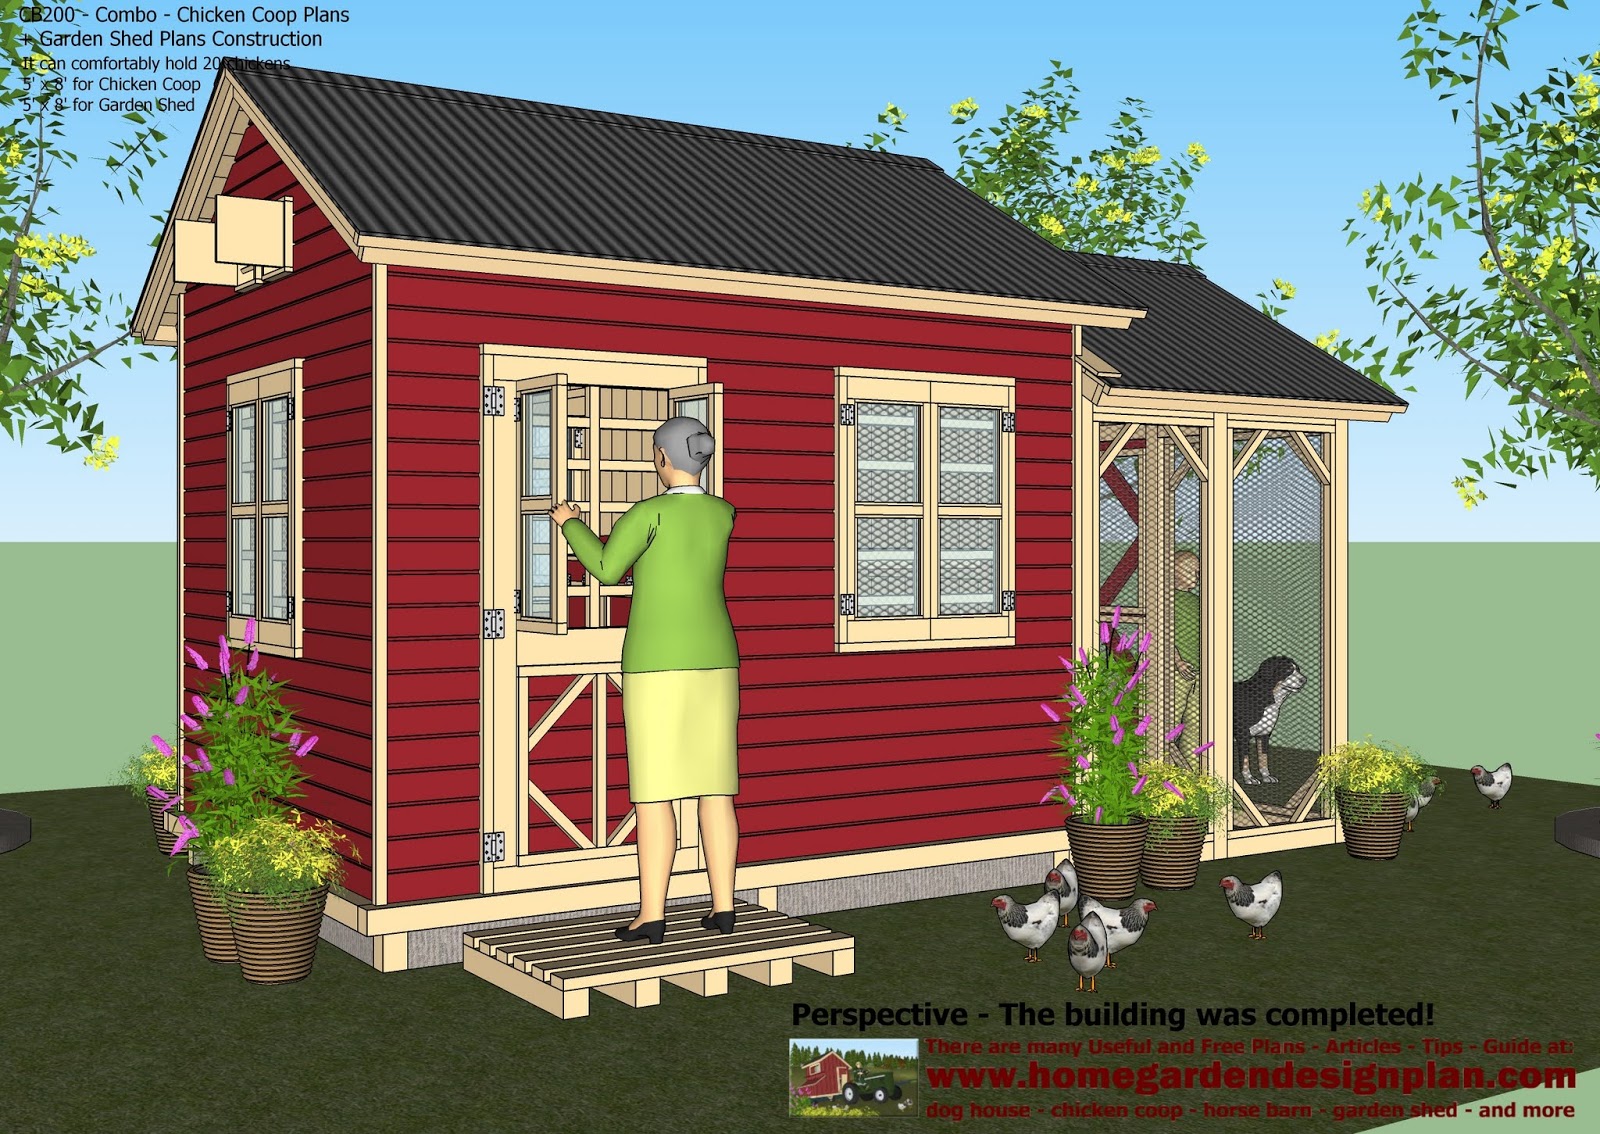 home garden plans: cb200 - combo plans - chicken coop